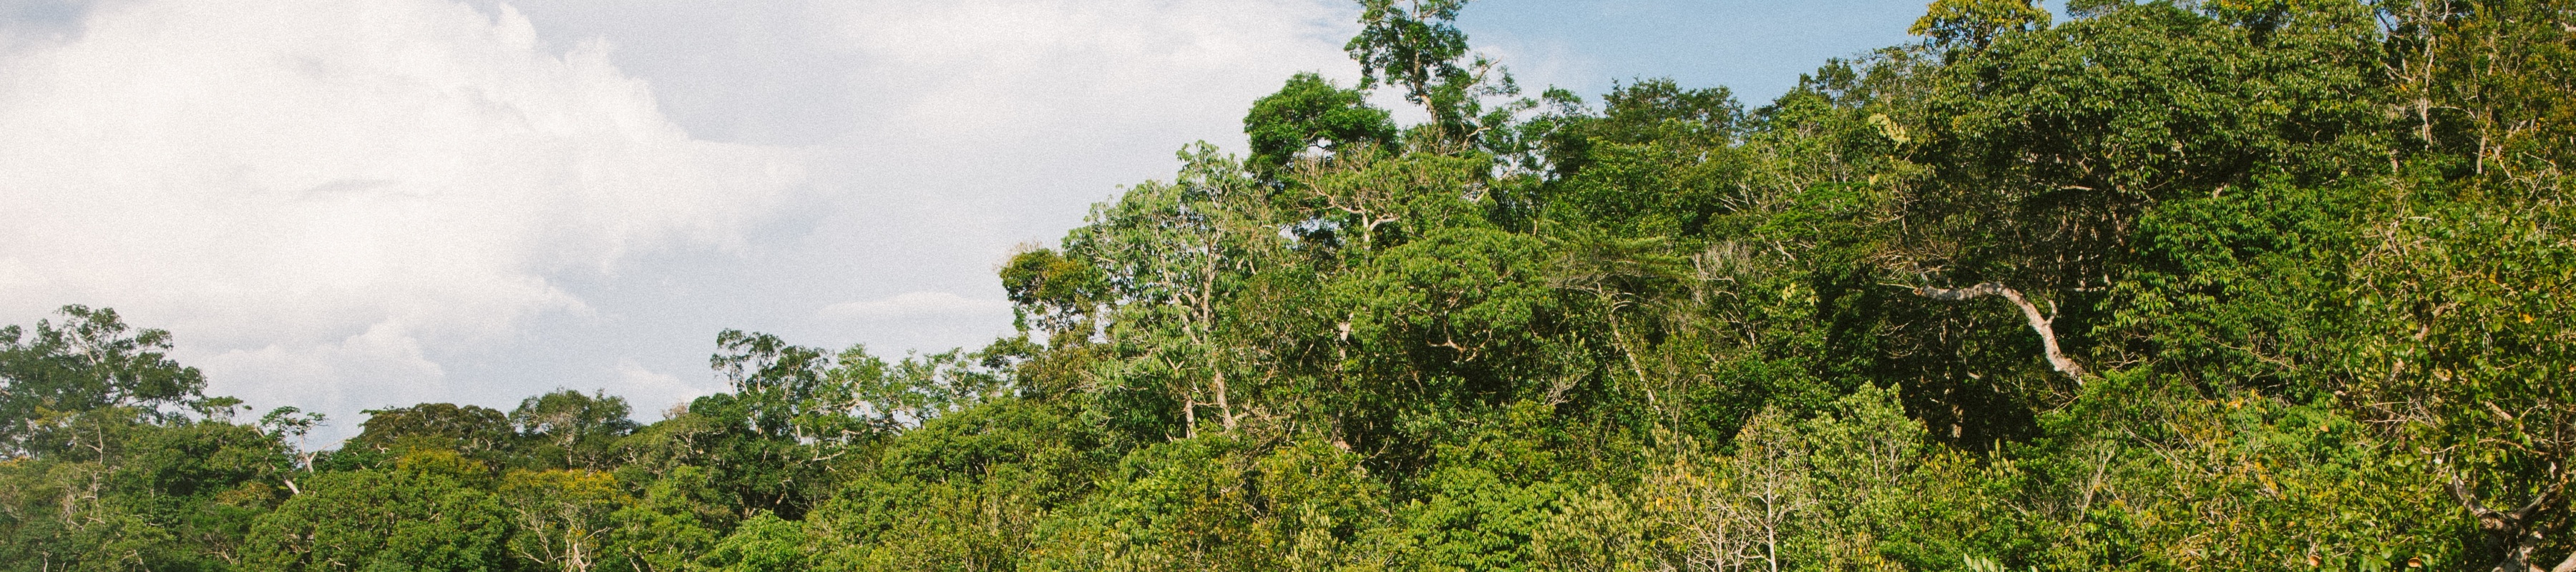 The treetops of an Amazon scene